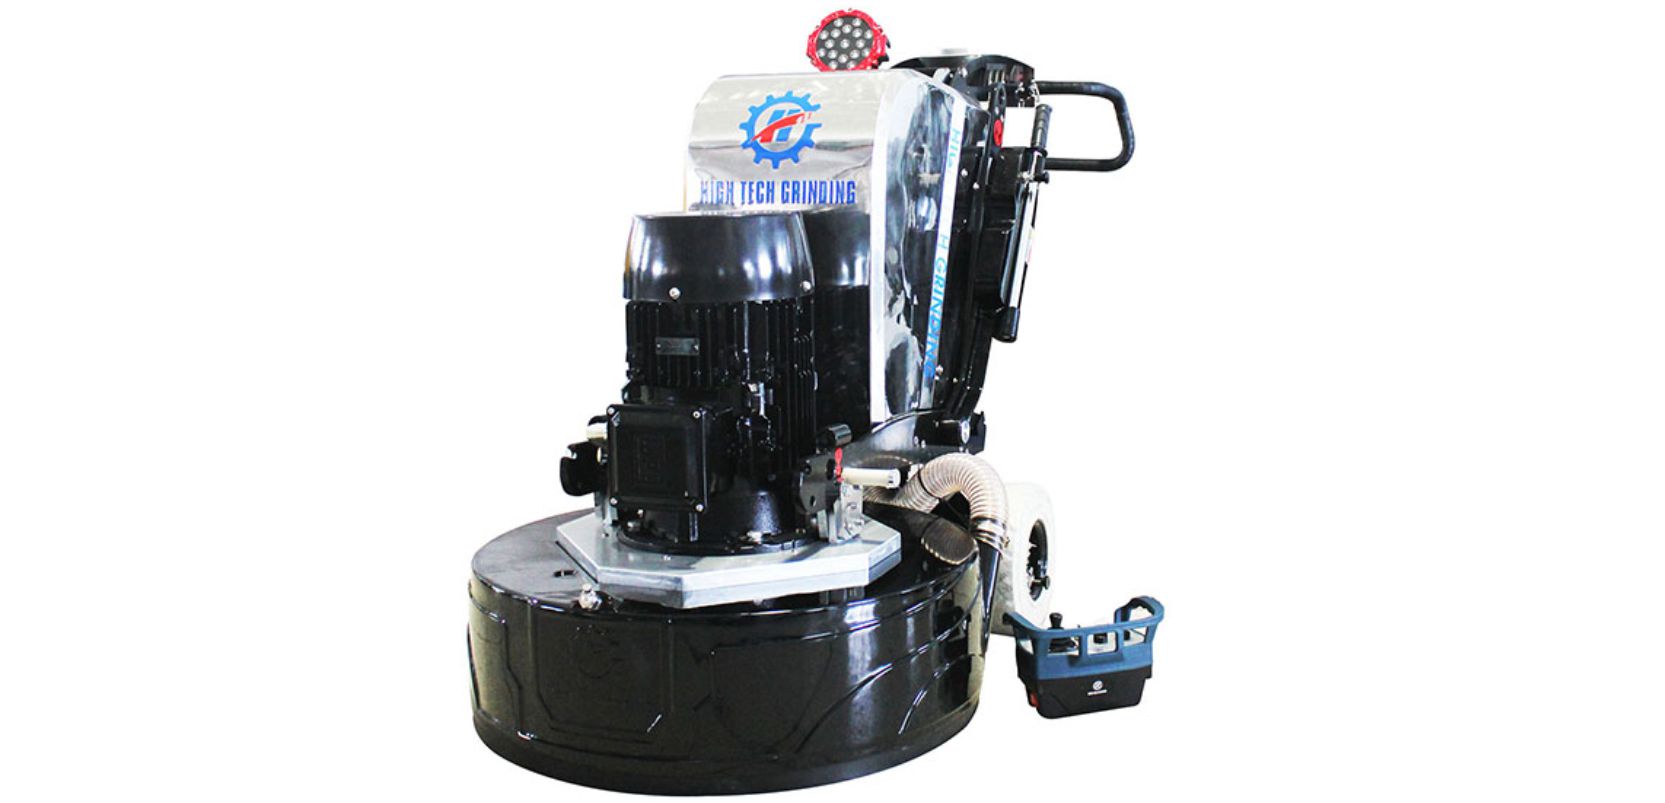 Remote control floor grinder 800 high Tech Grinding